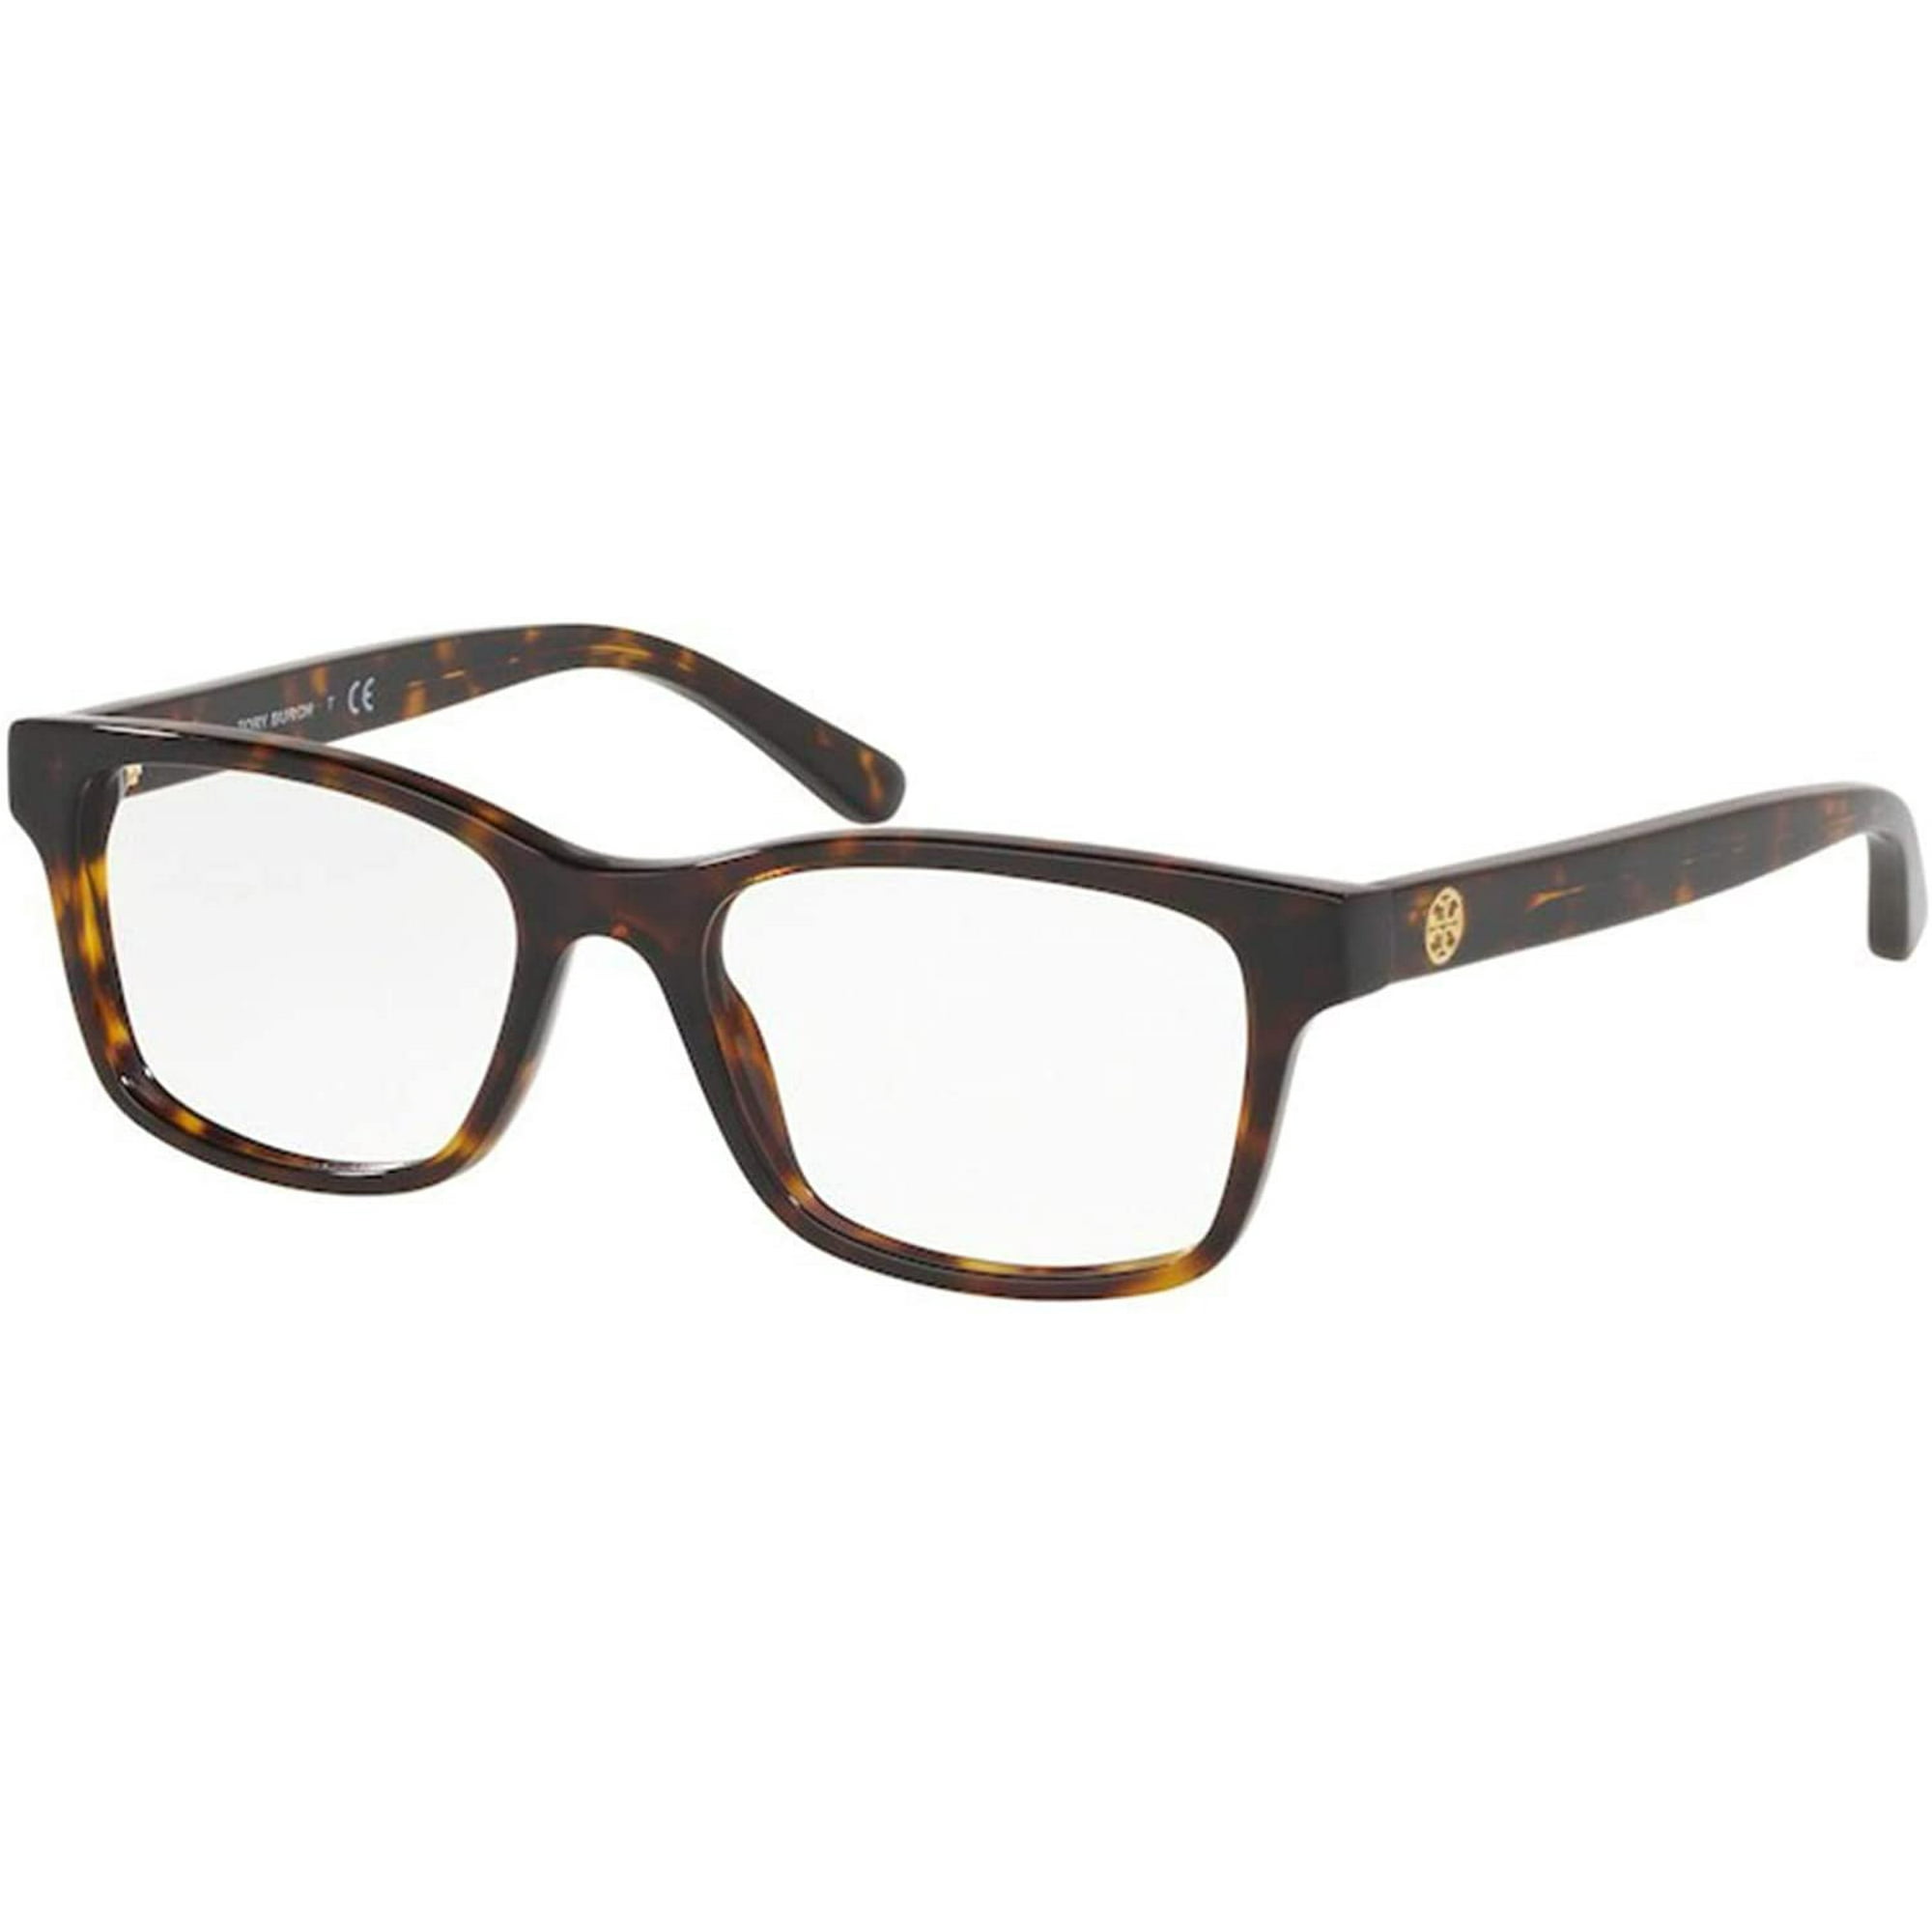 Eyeglasses Tory Burch TY 2064 1728 Dark Tortoise | Walmart Canada